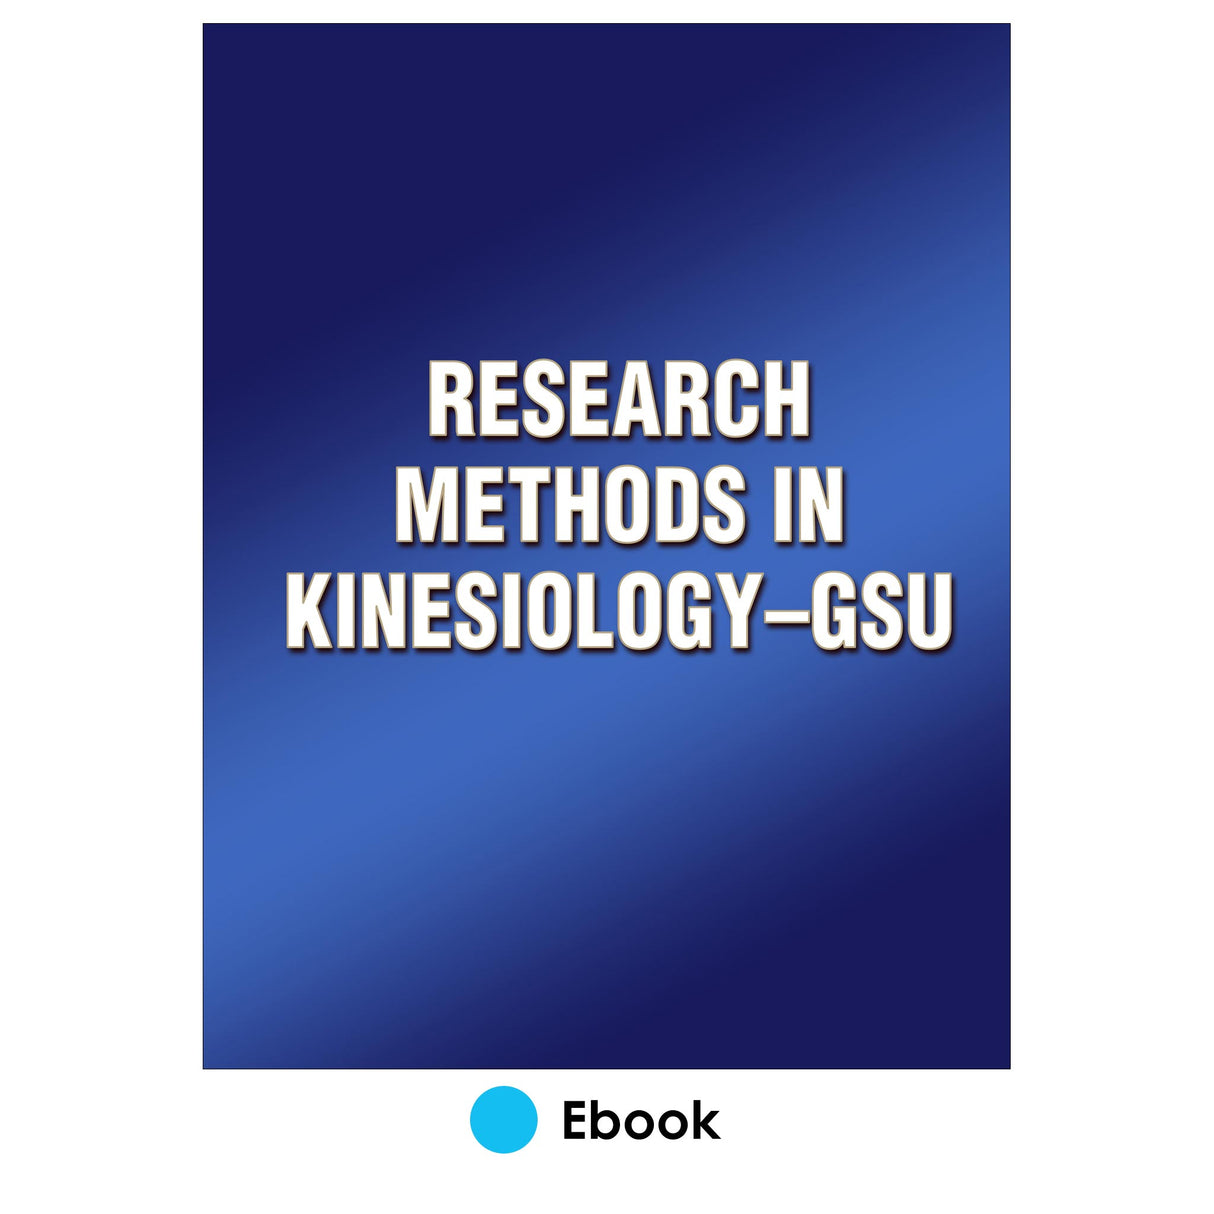 Research Methods in Kinesiology-GSU